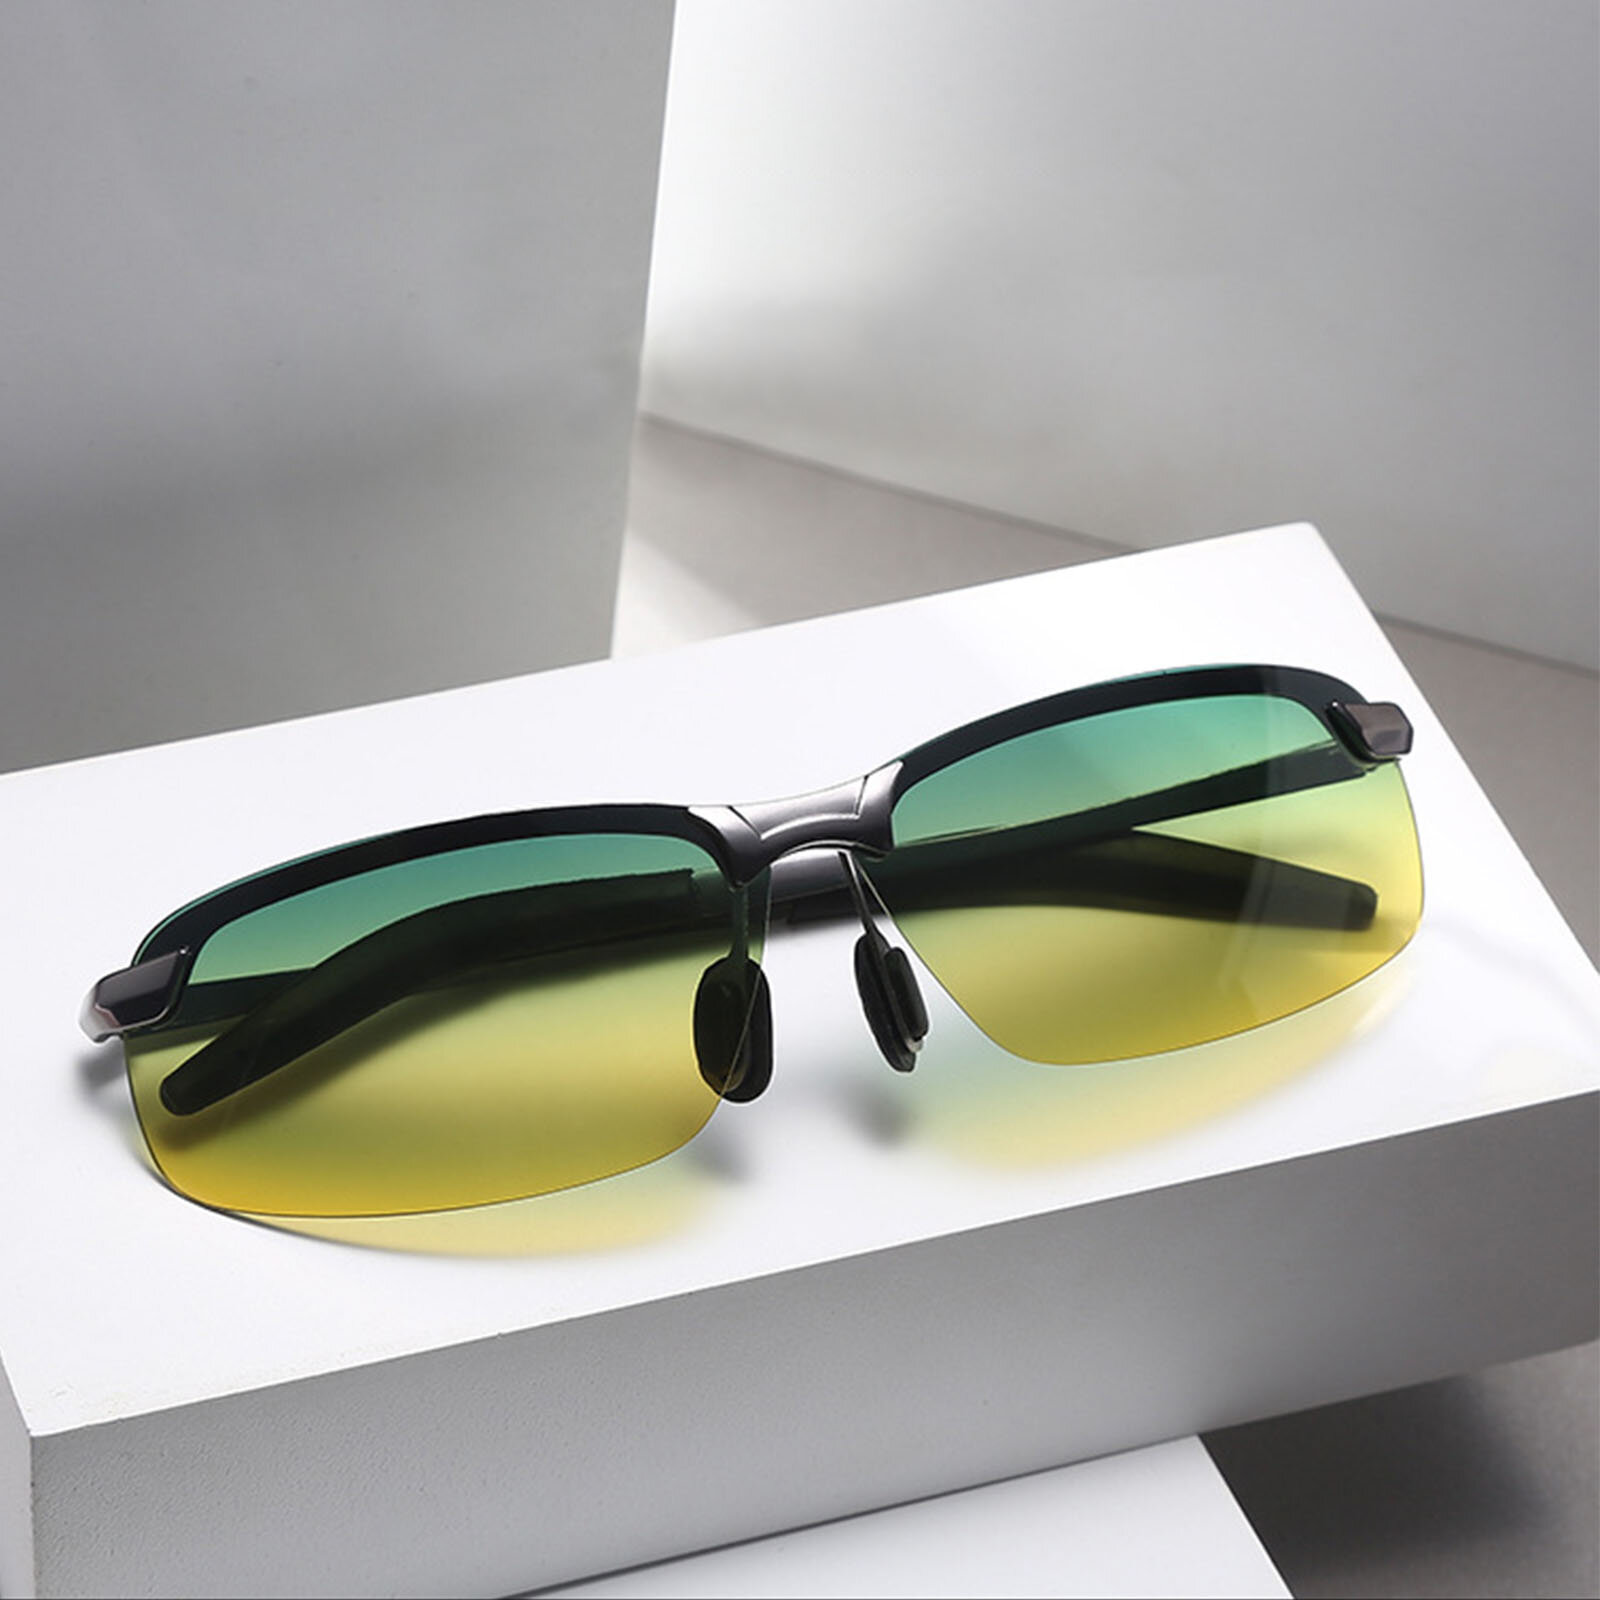 

Jassy Unisex Rectangular Frame Portable Outdoor Leisure Driving Sunglasses Polarized Glasses